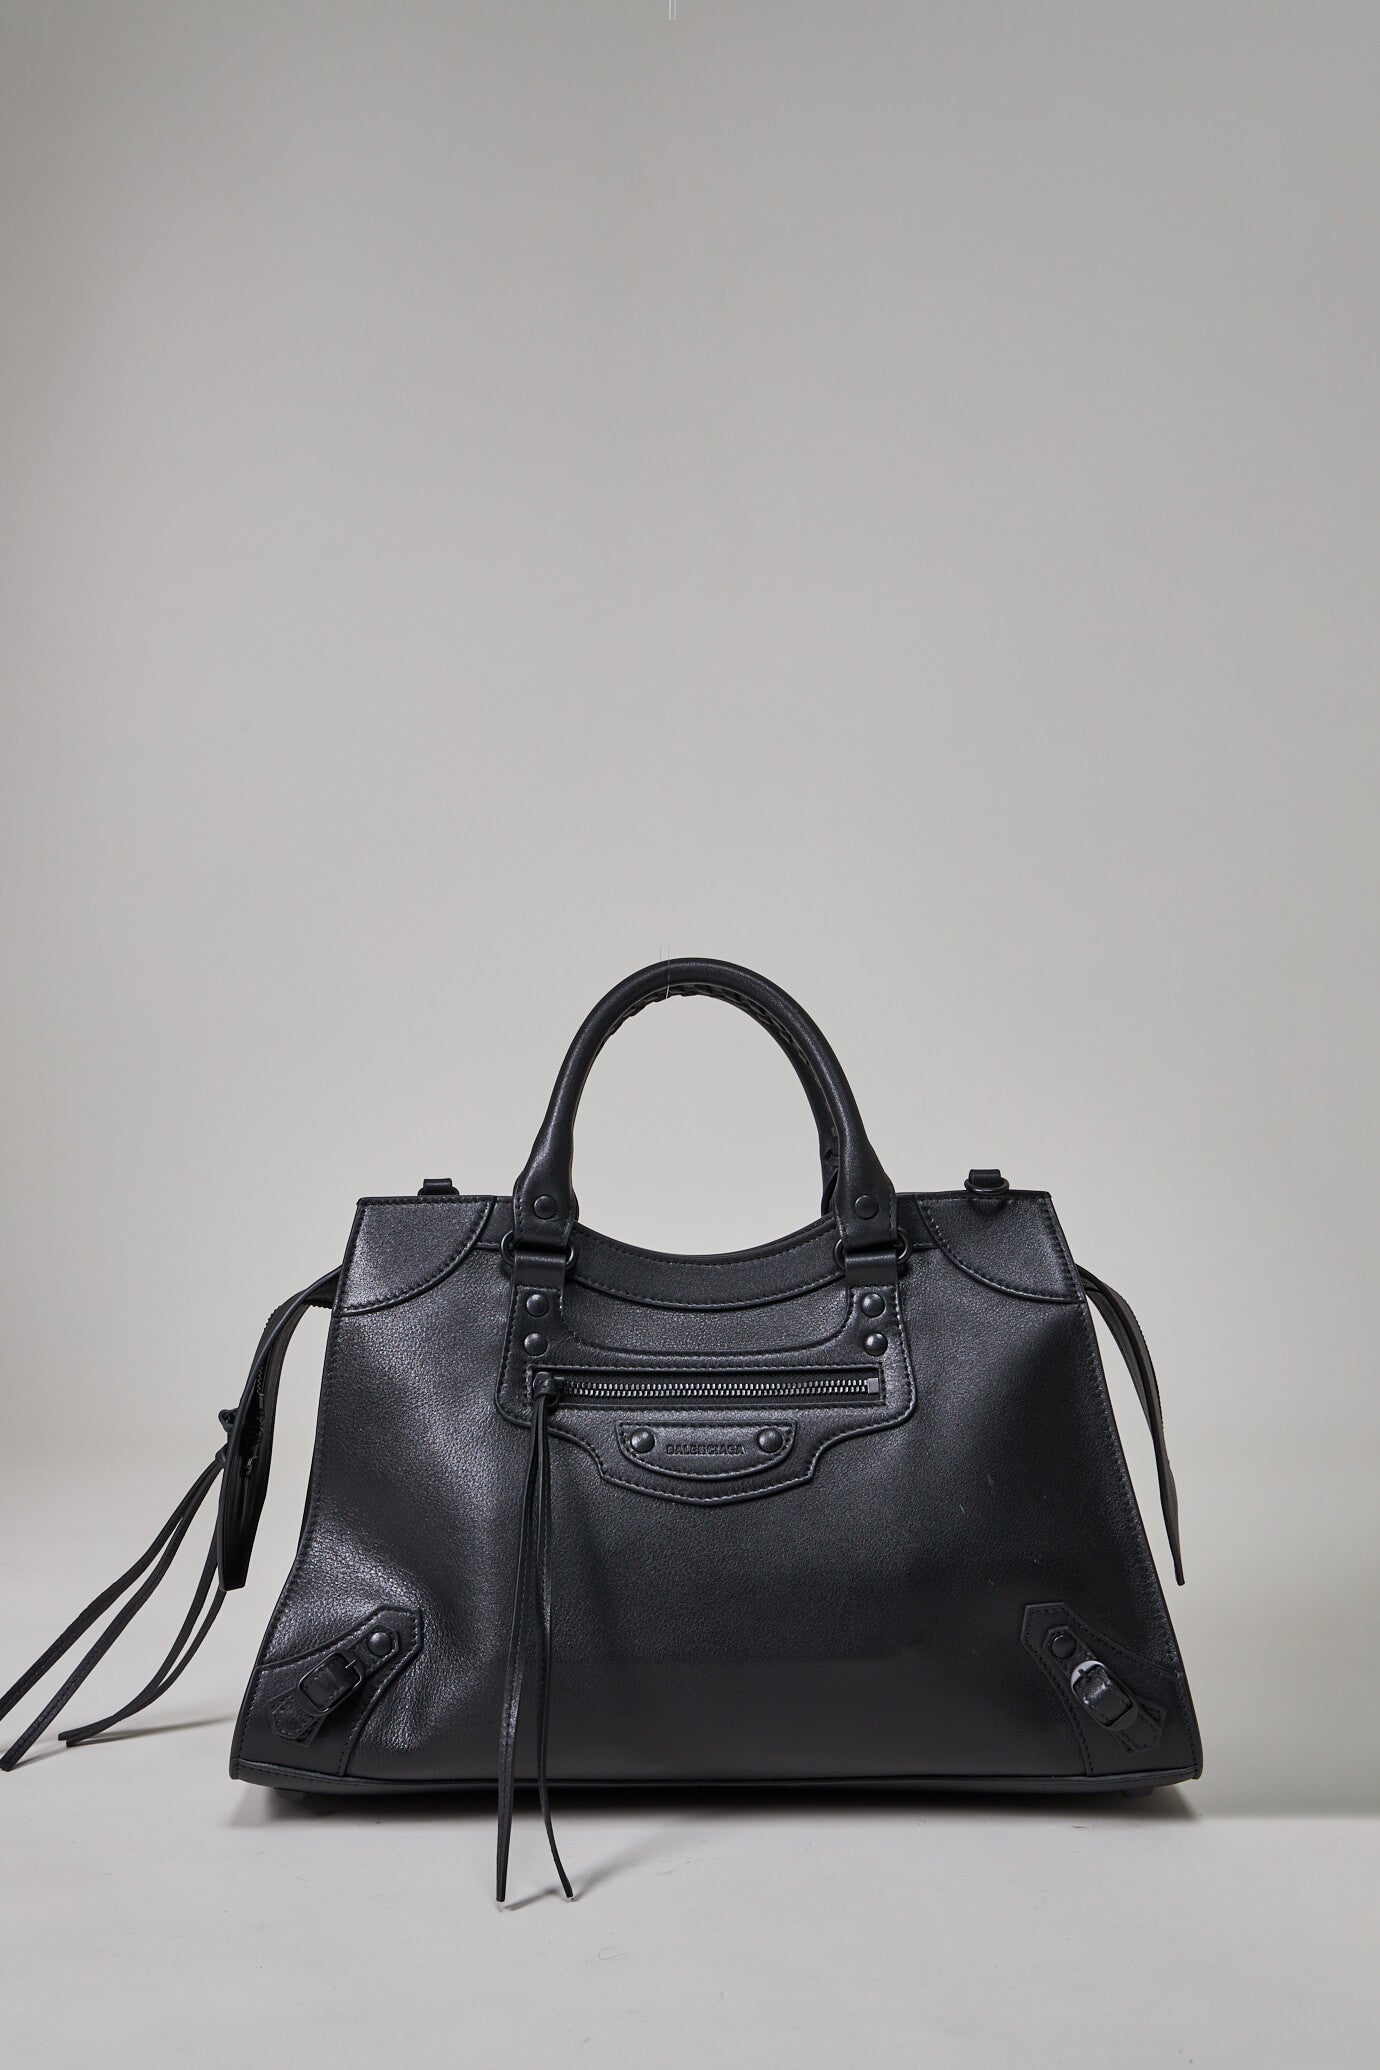 Balenciaga Classic City Bag in Black